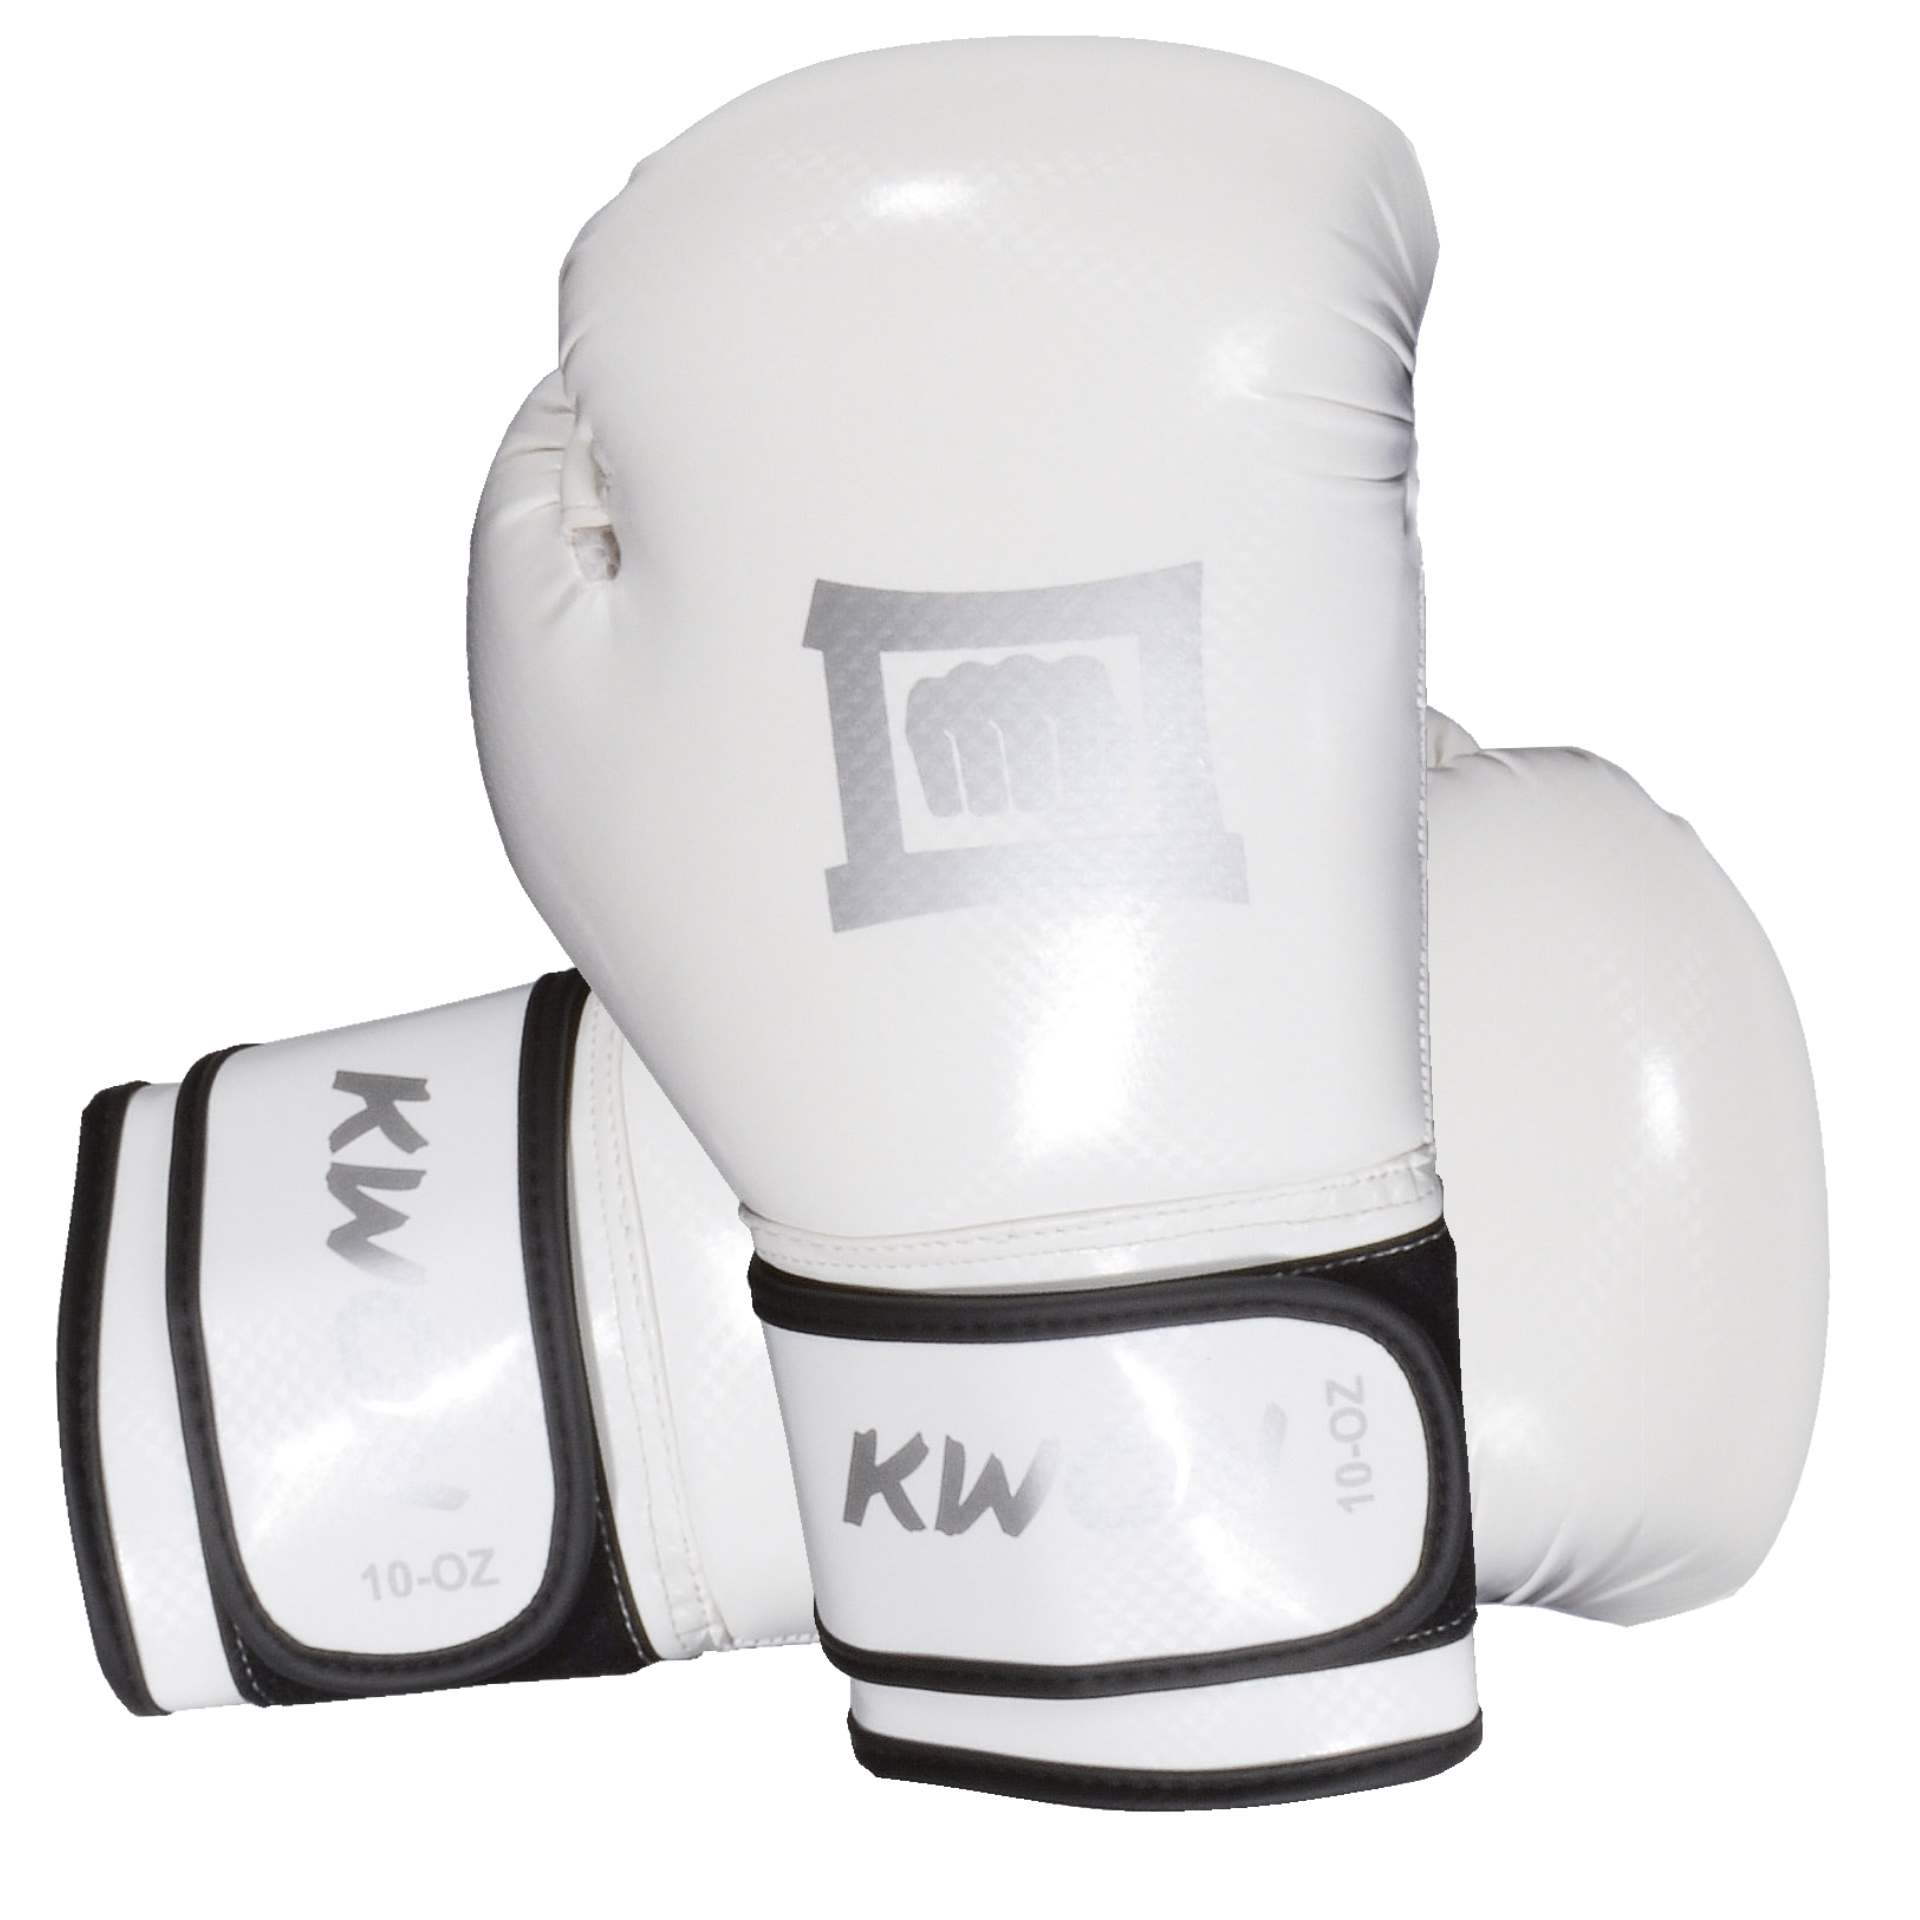 Kwon Fitness Reflect Boxing Gloves